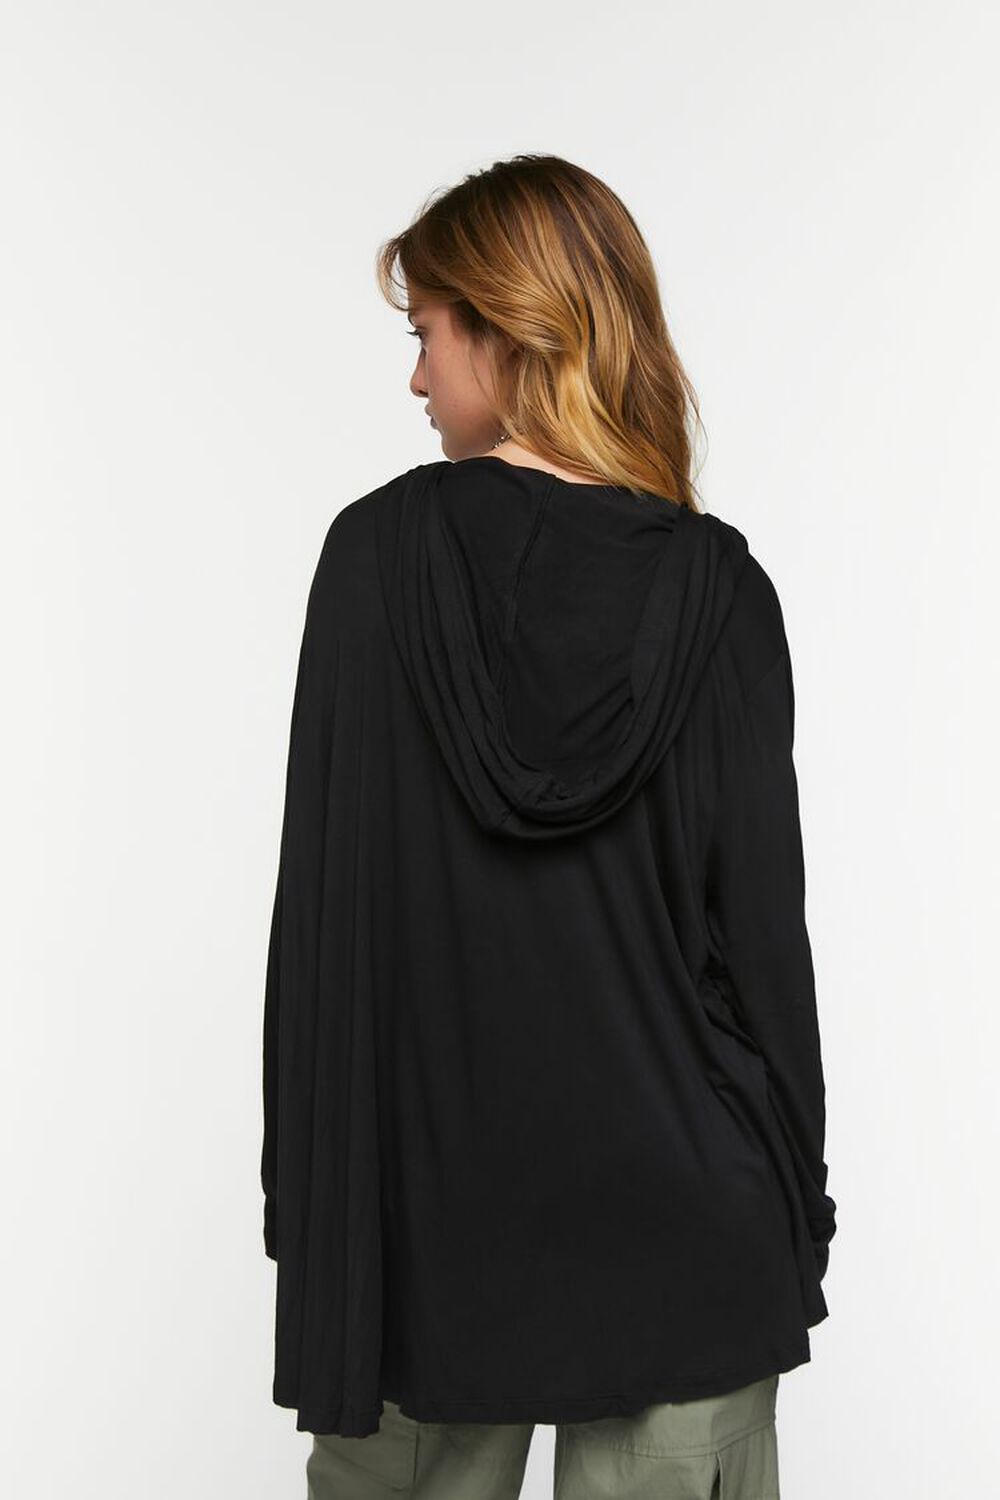 BLACK Oversized Long-Sleeve Hooded Top, image 3